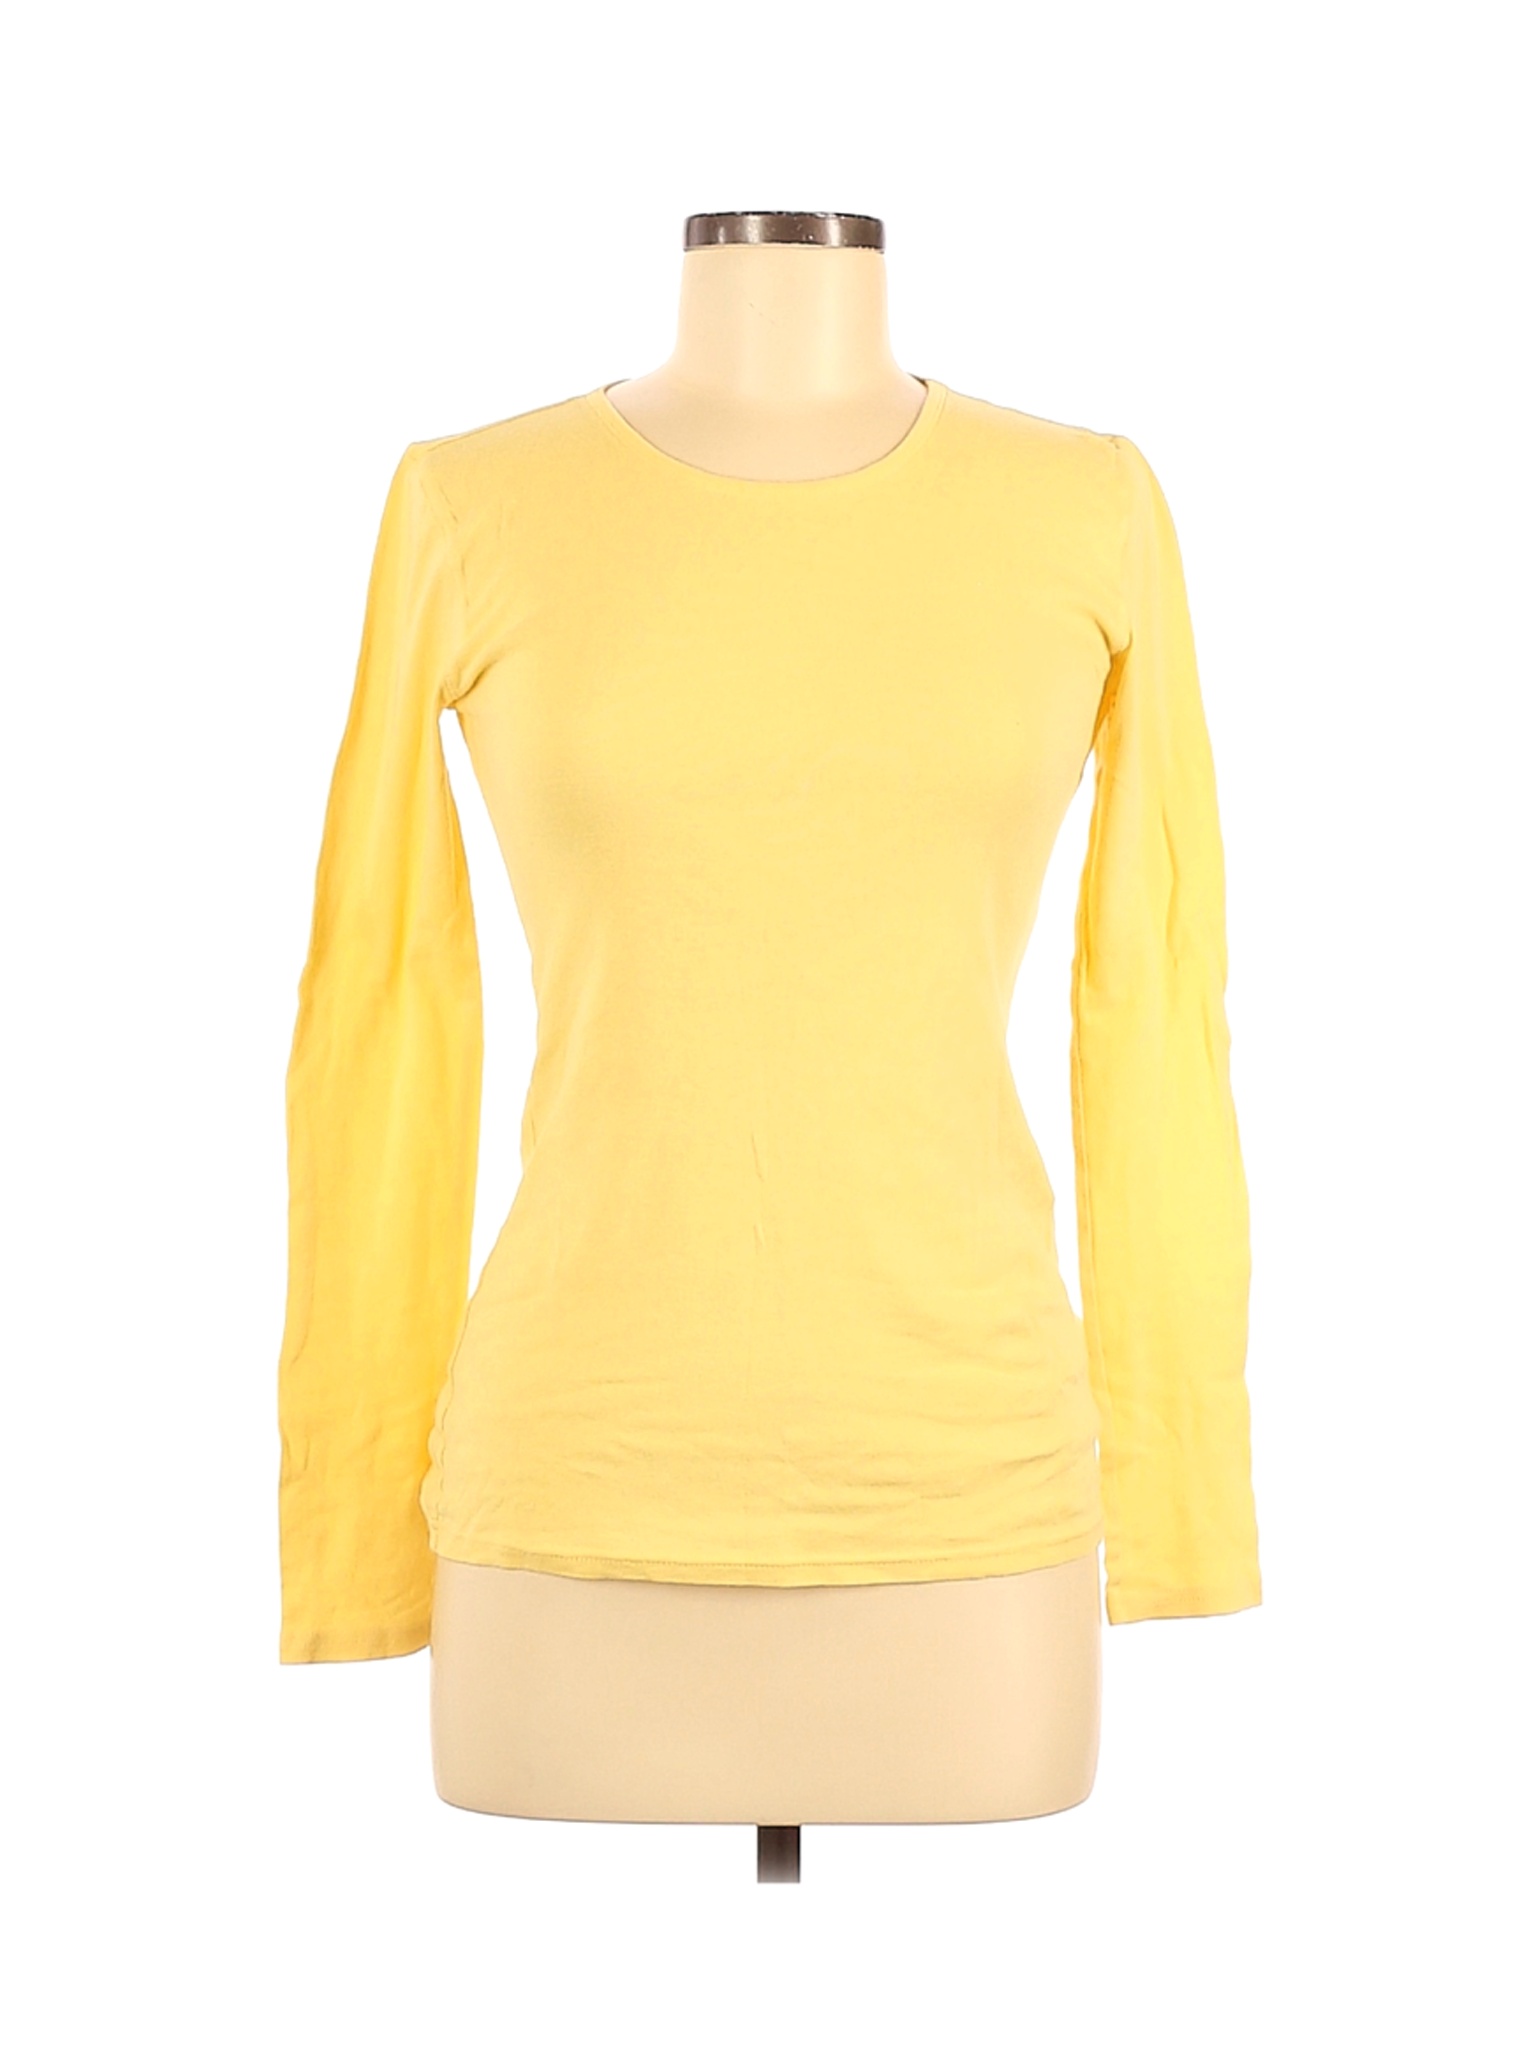 Old Navy Women Yellow Long Sleeve T-Shirt M | eBay